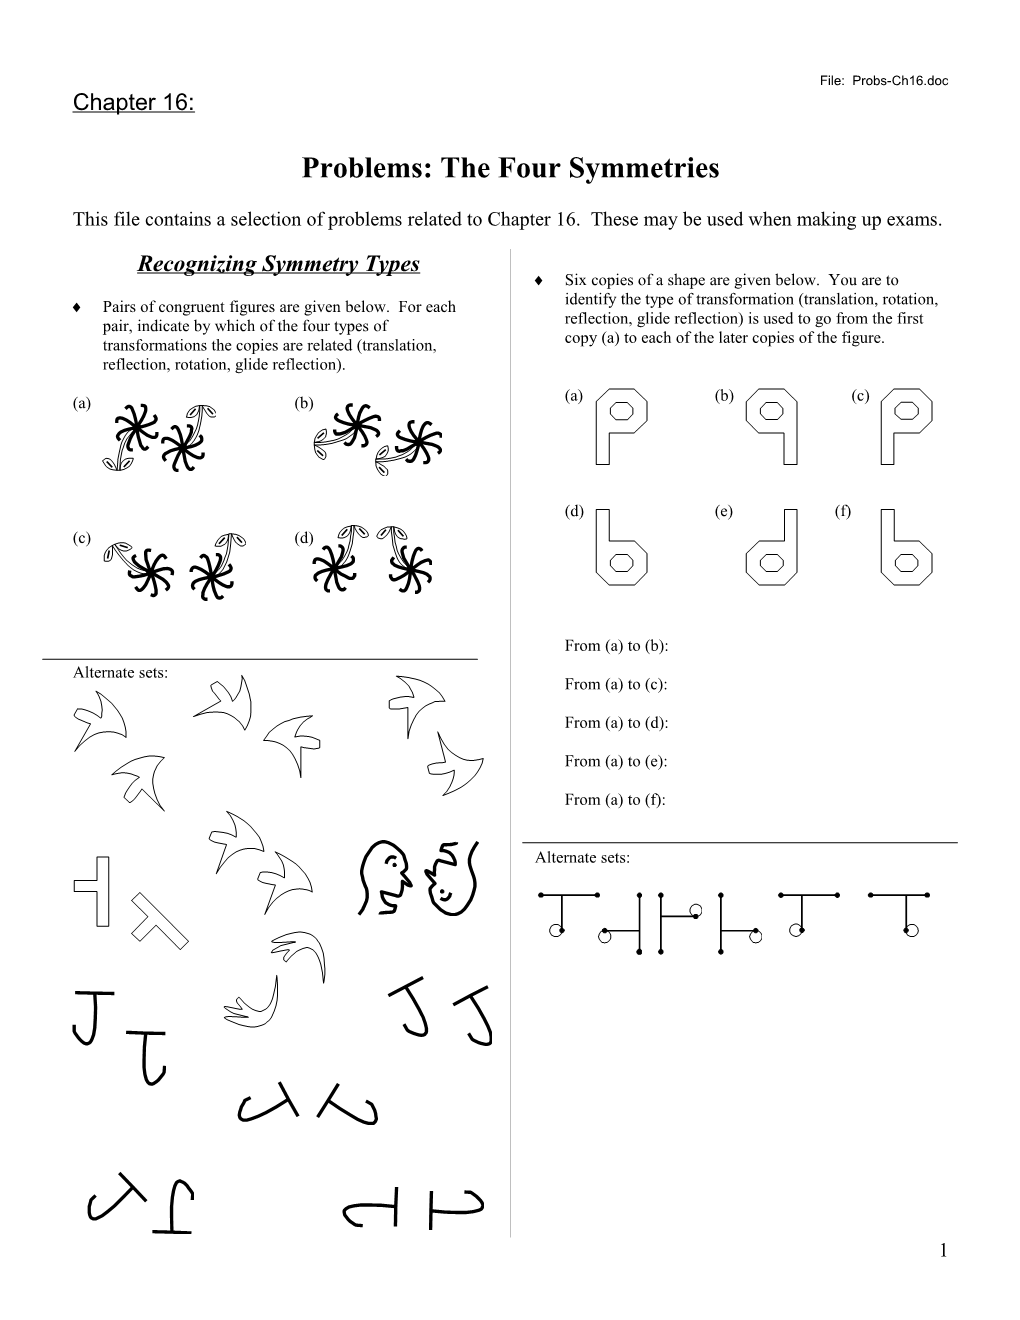 Problems: the Four Symmetries